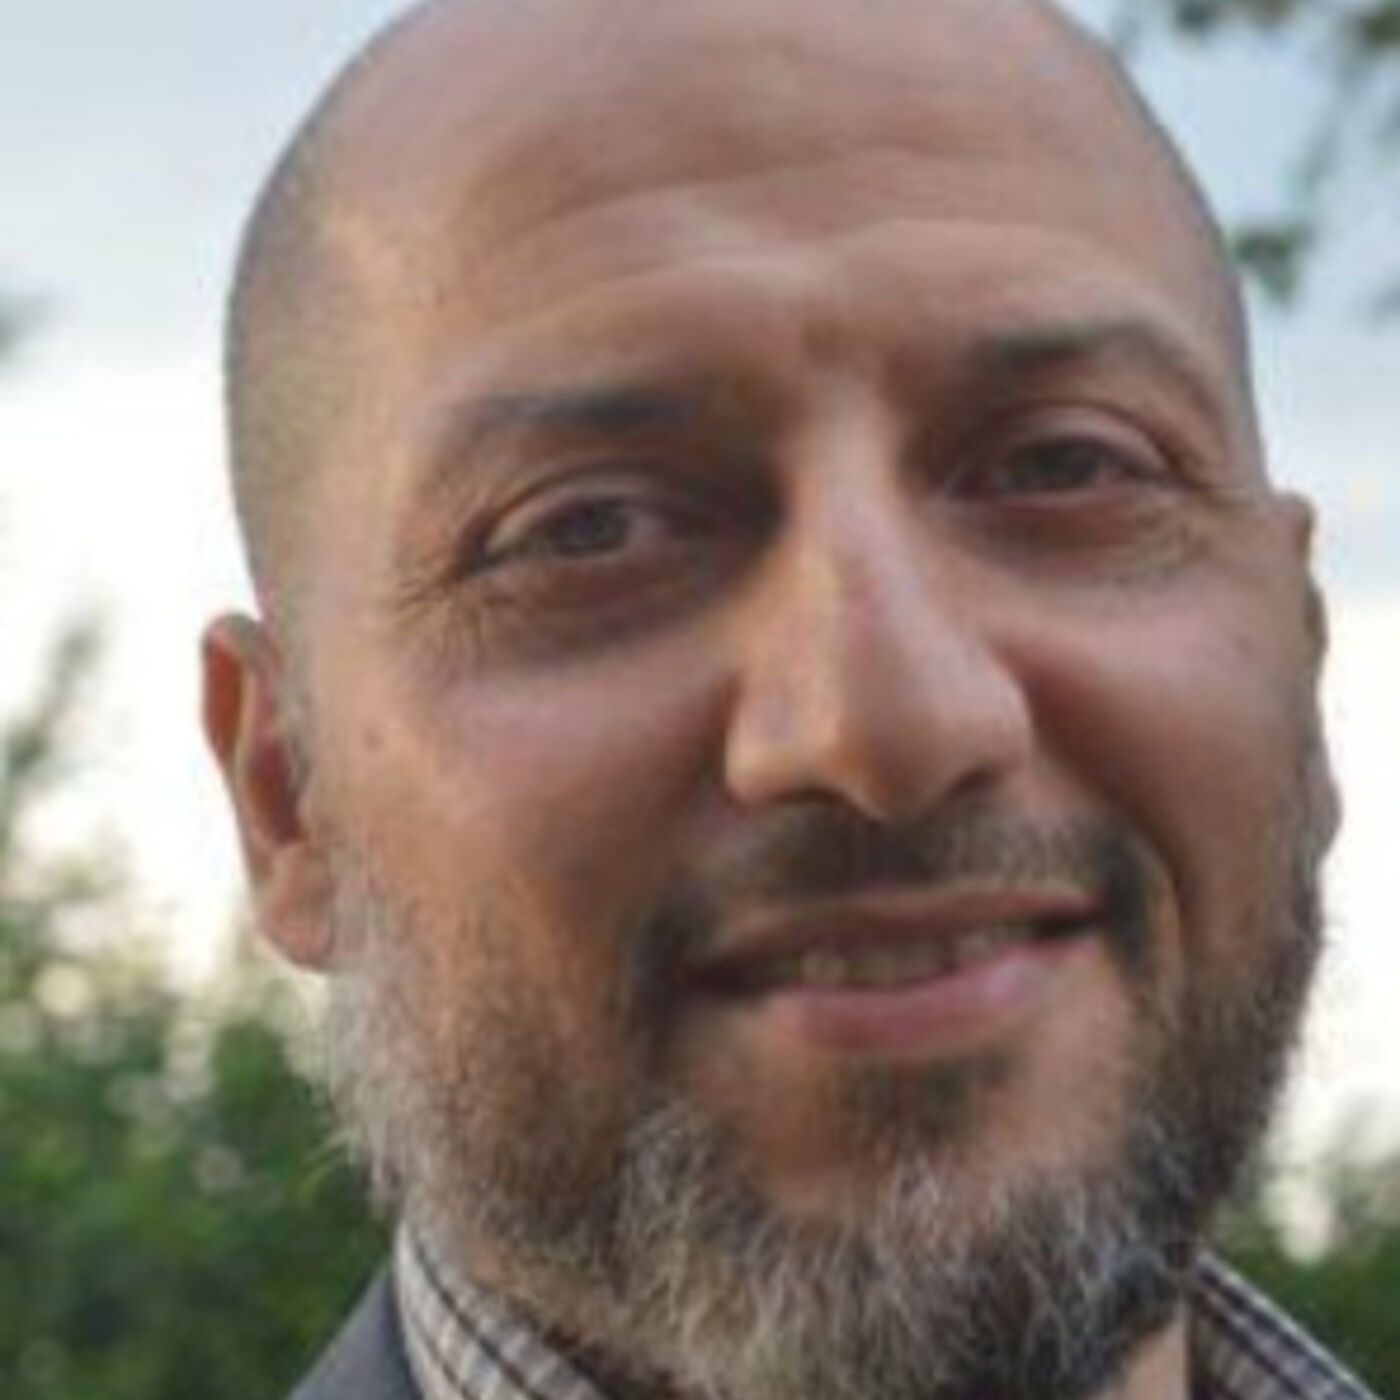 Emotions and Vulnerability, Friend or Foe? with Dr Haidar Al-Hakim